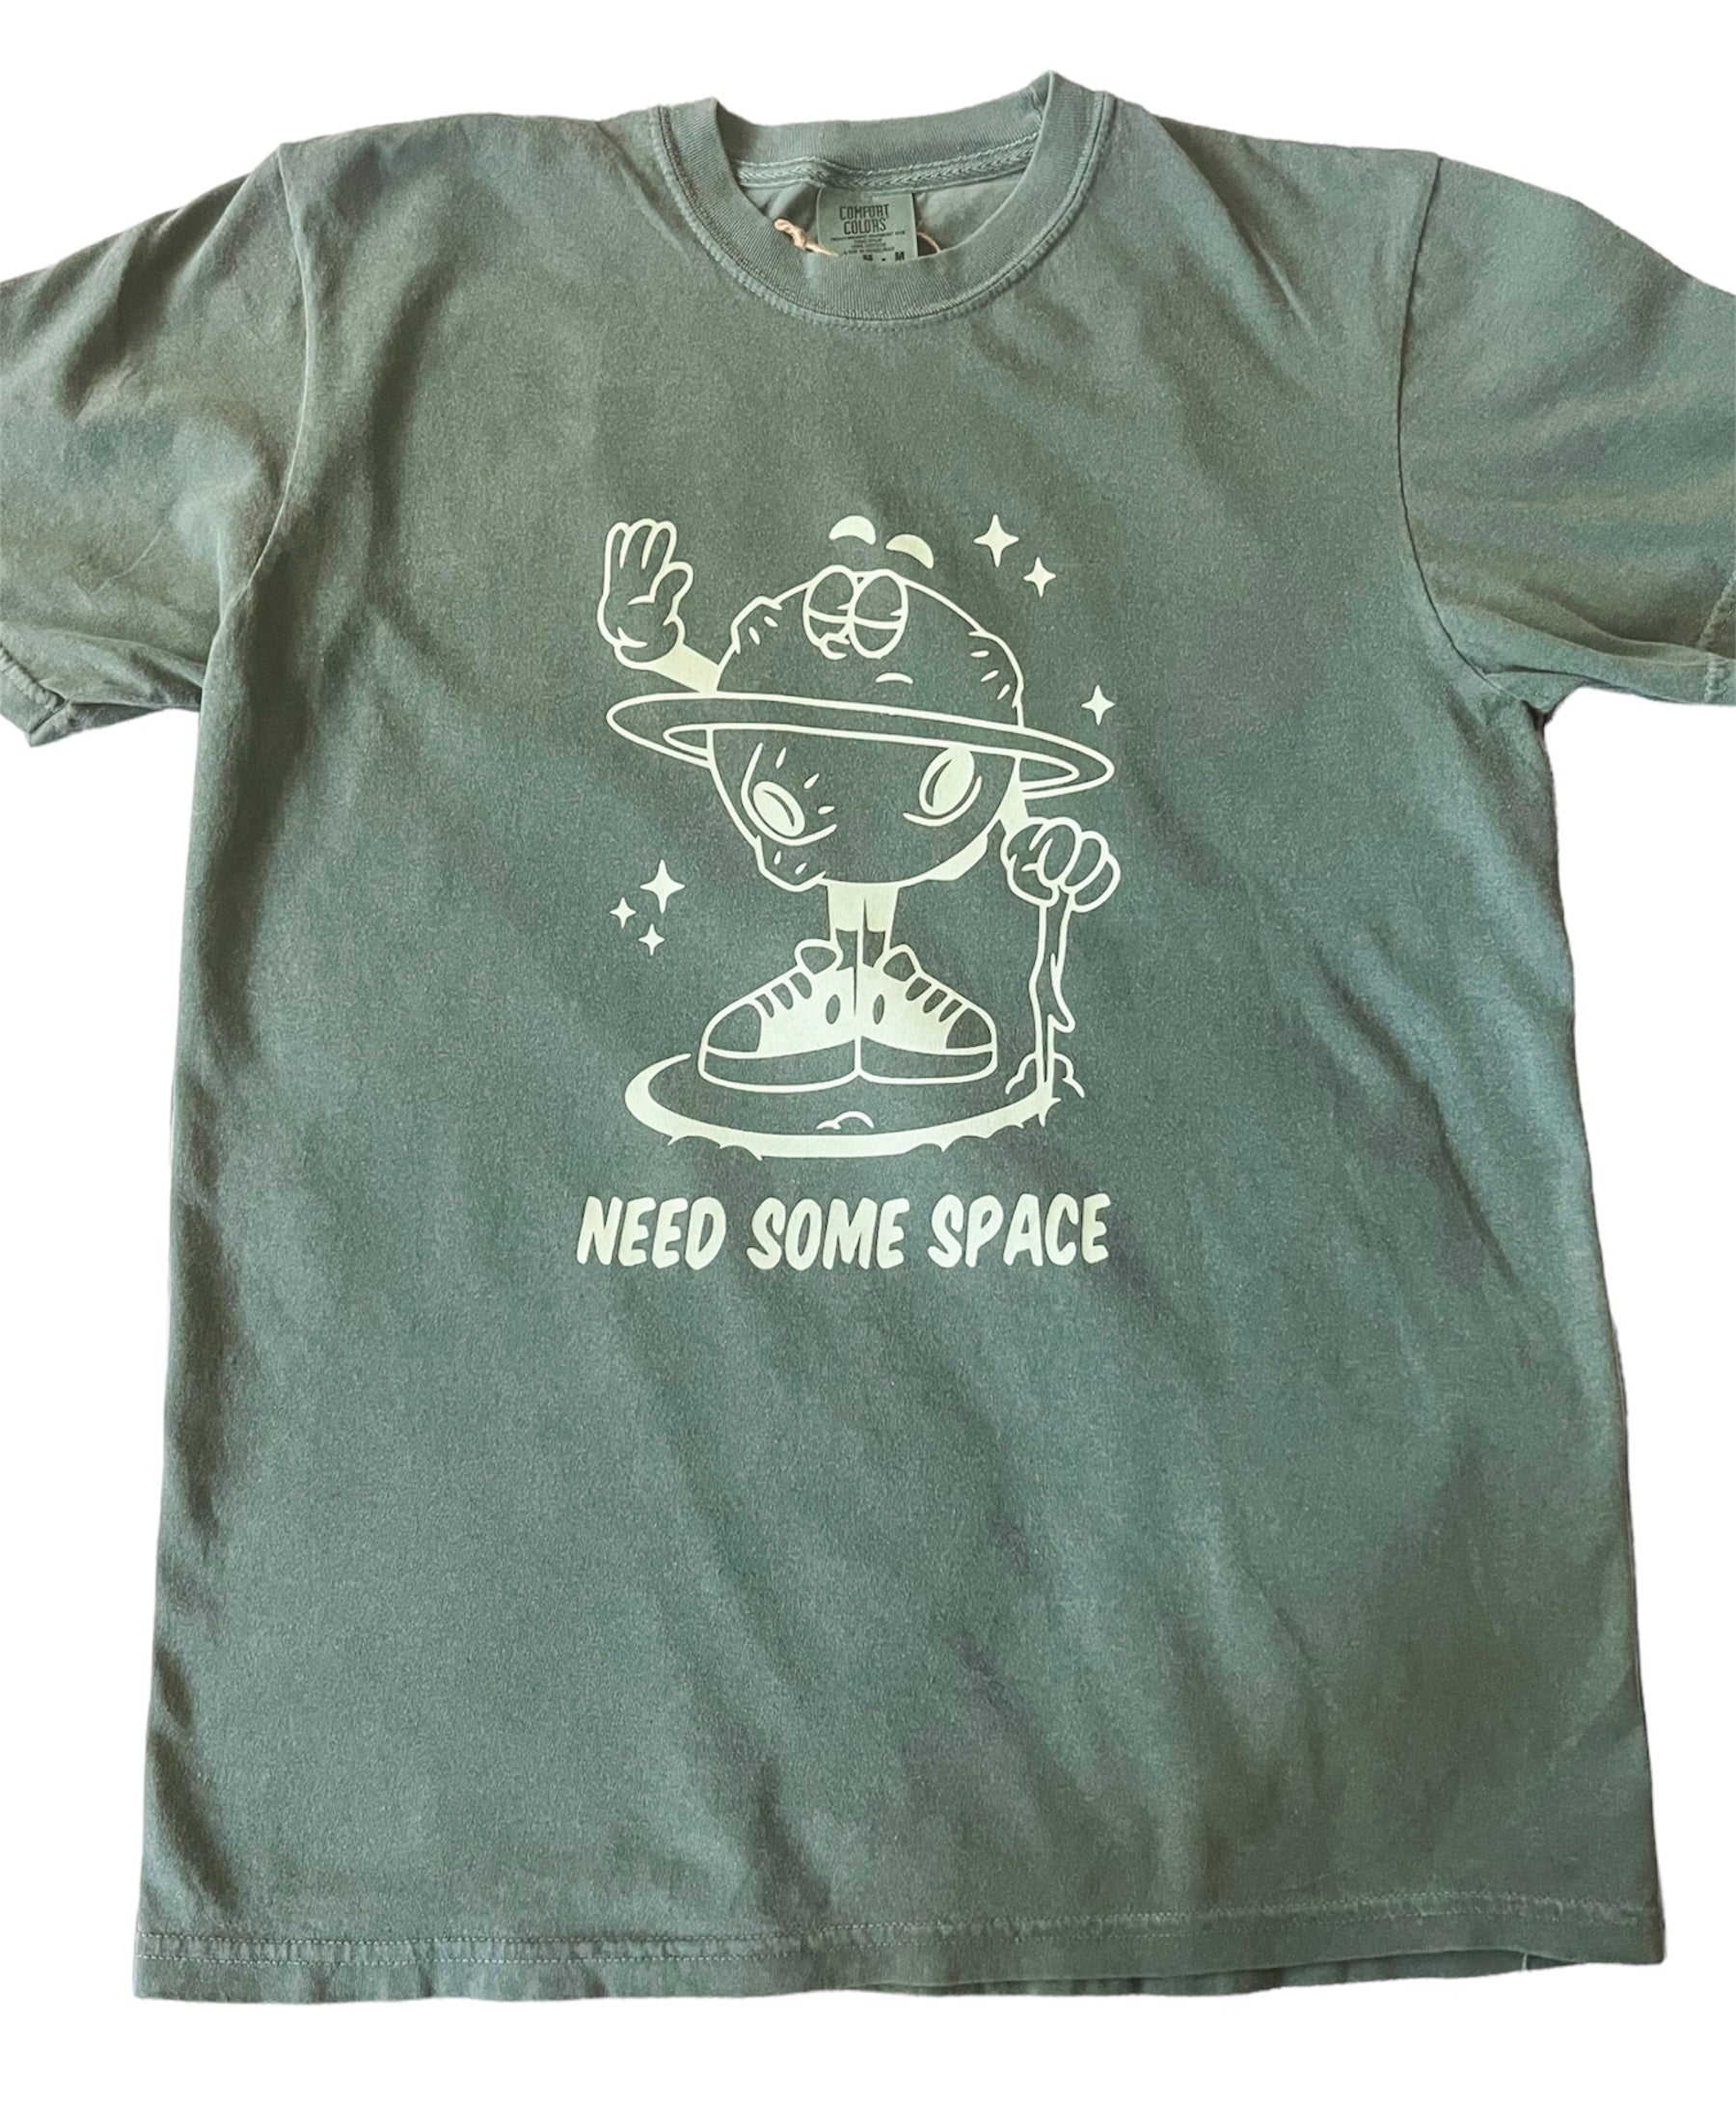 T-shirt for introvert. Need some space t-shirt design. Mascot character t-shirt. Trendy t-shirt Australia